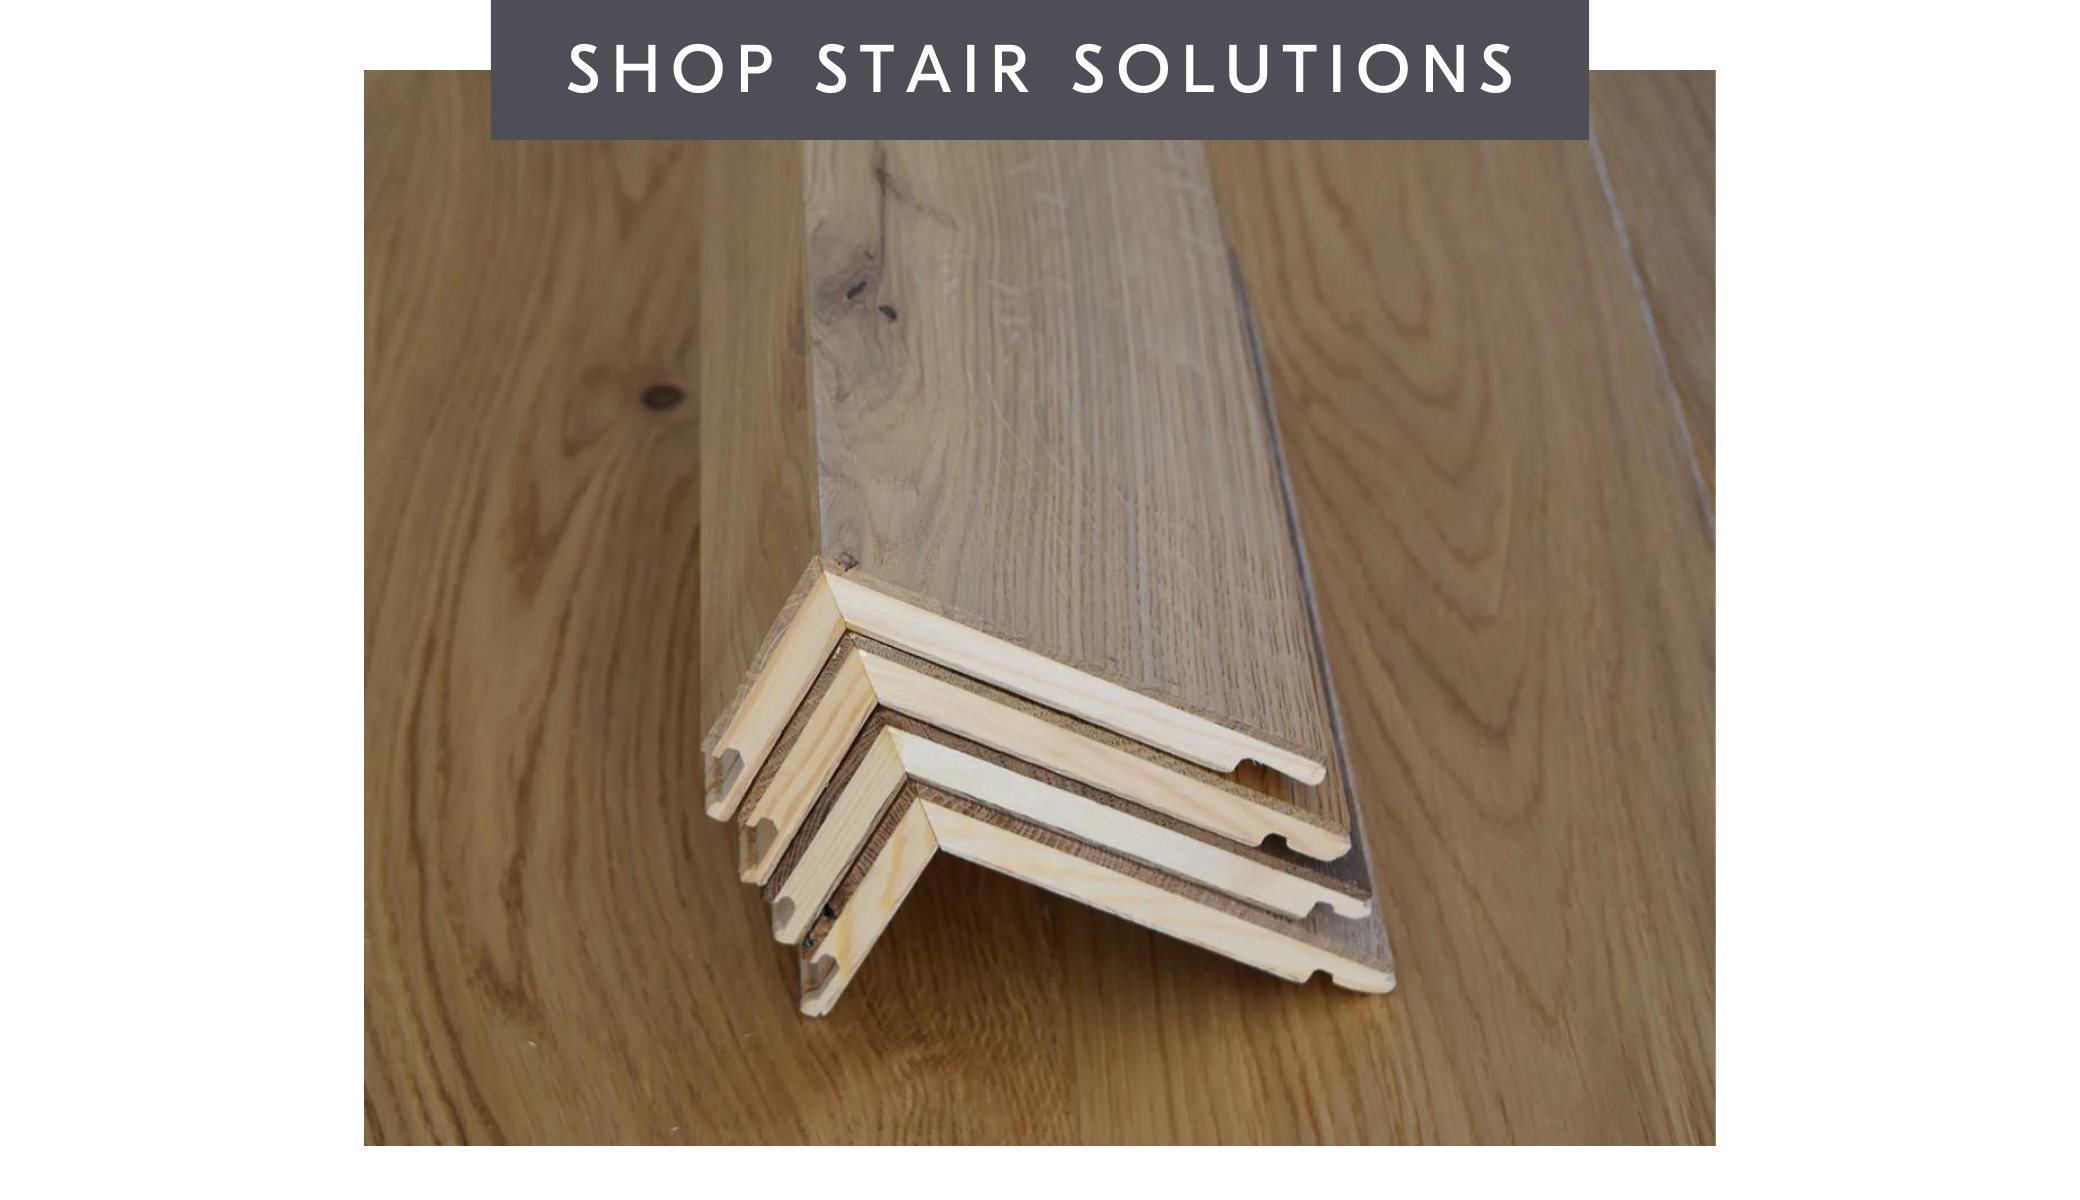 Shop stair solutions | stair nosings by Stuga